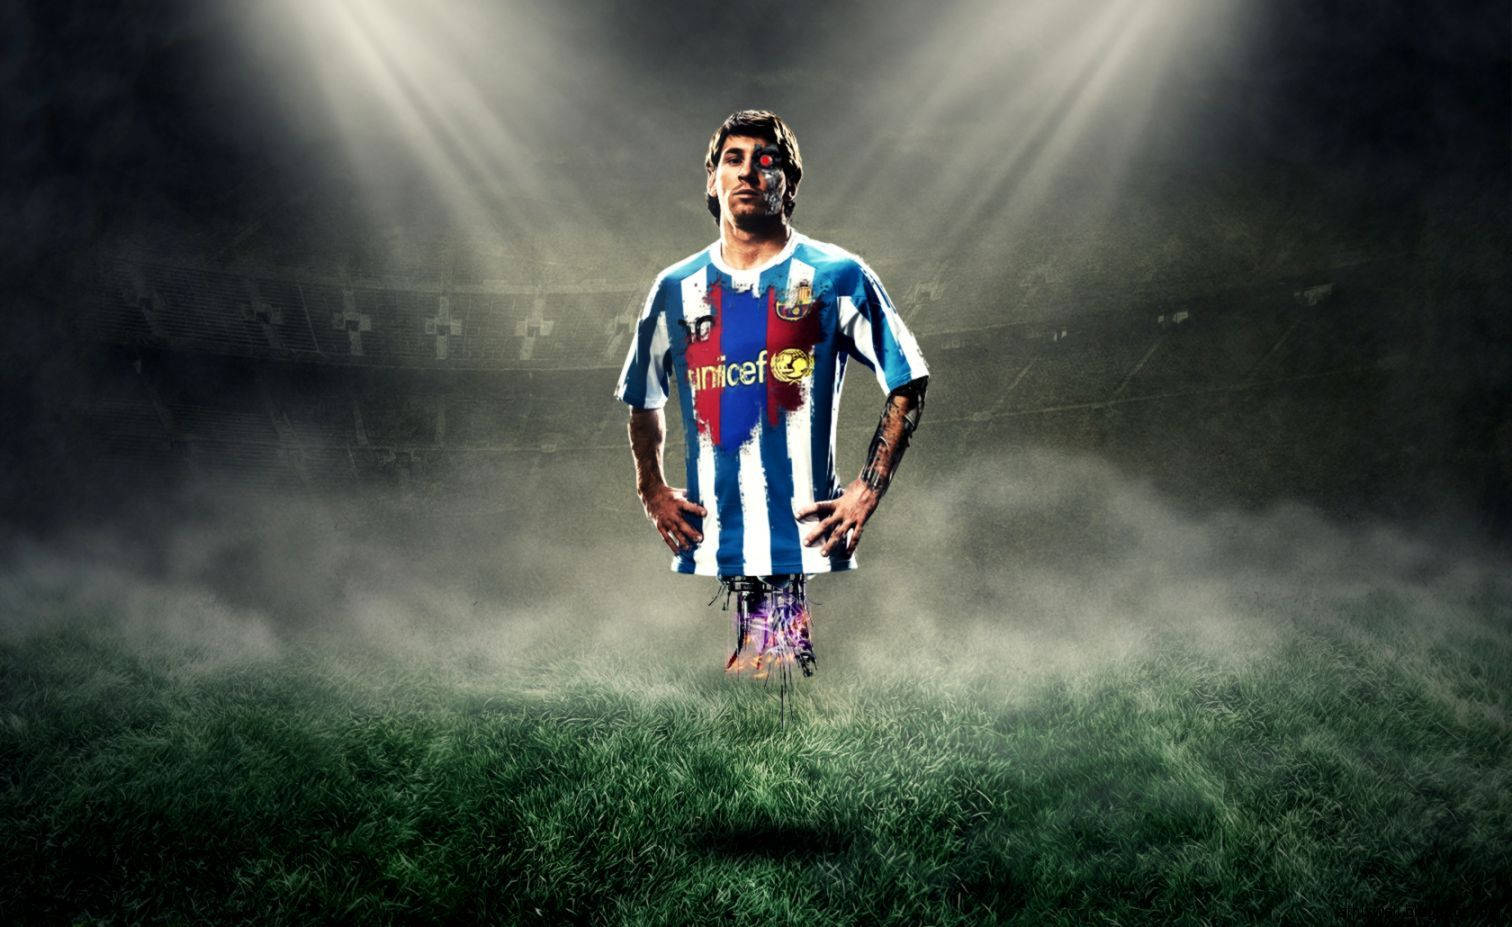 Cool Soccer Player Cyborg Messi Wallpaper